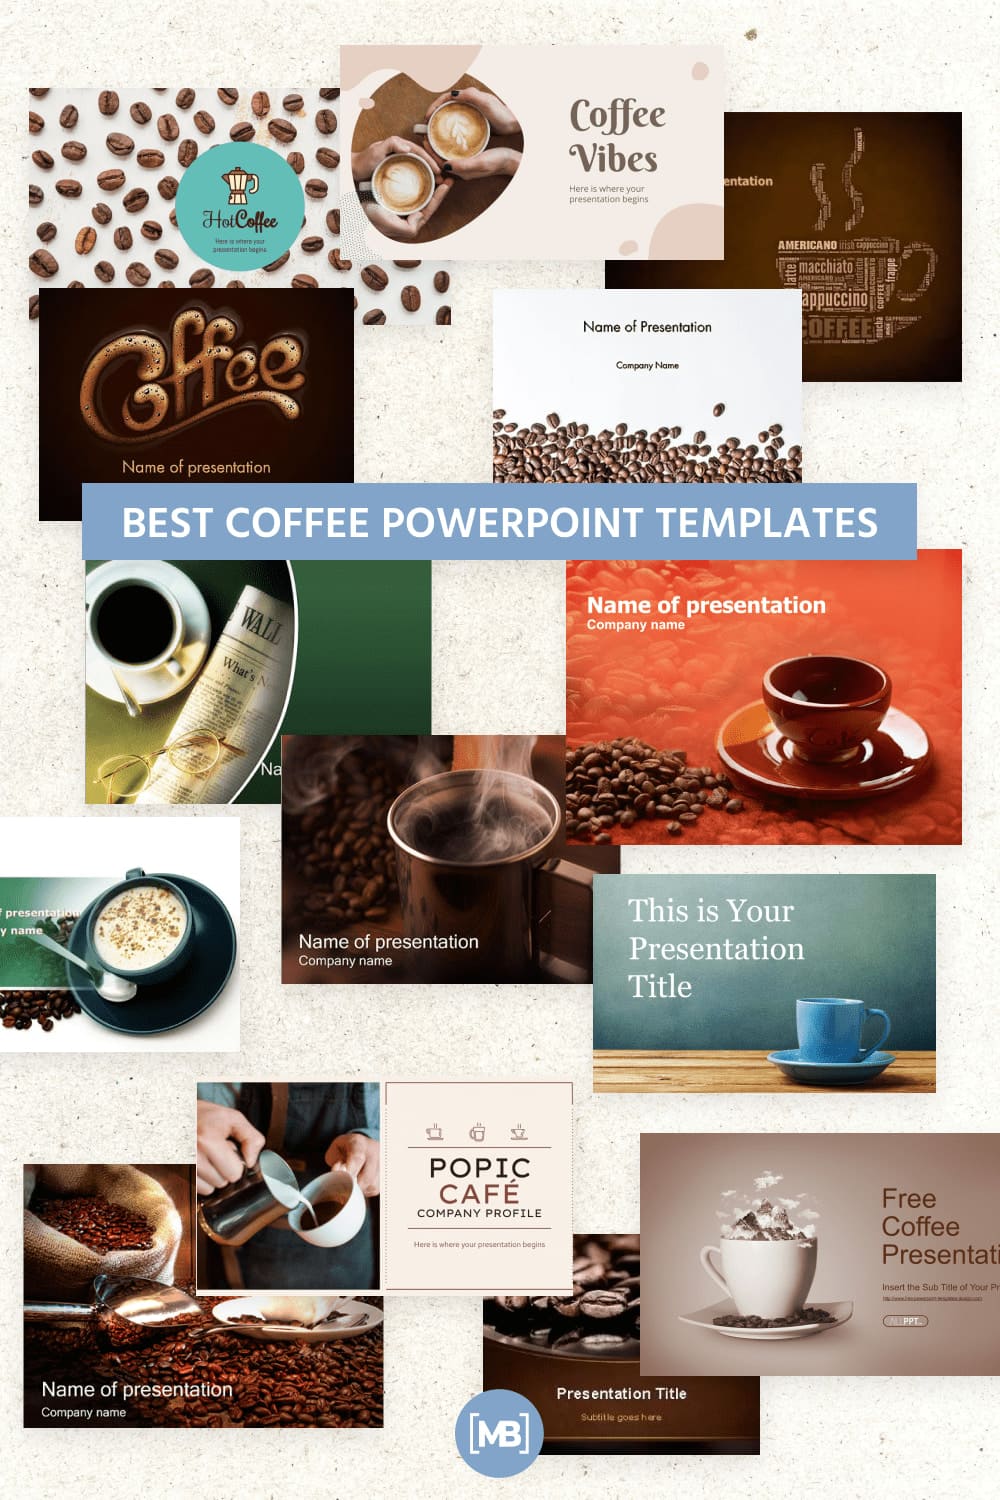 Best Coffee Powerpoint Templates Pinterest.